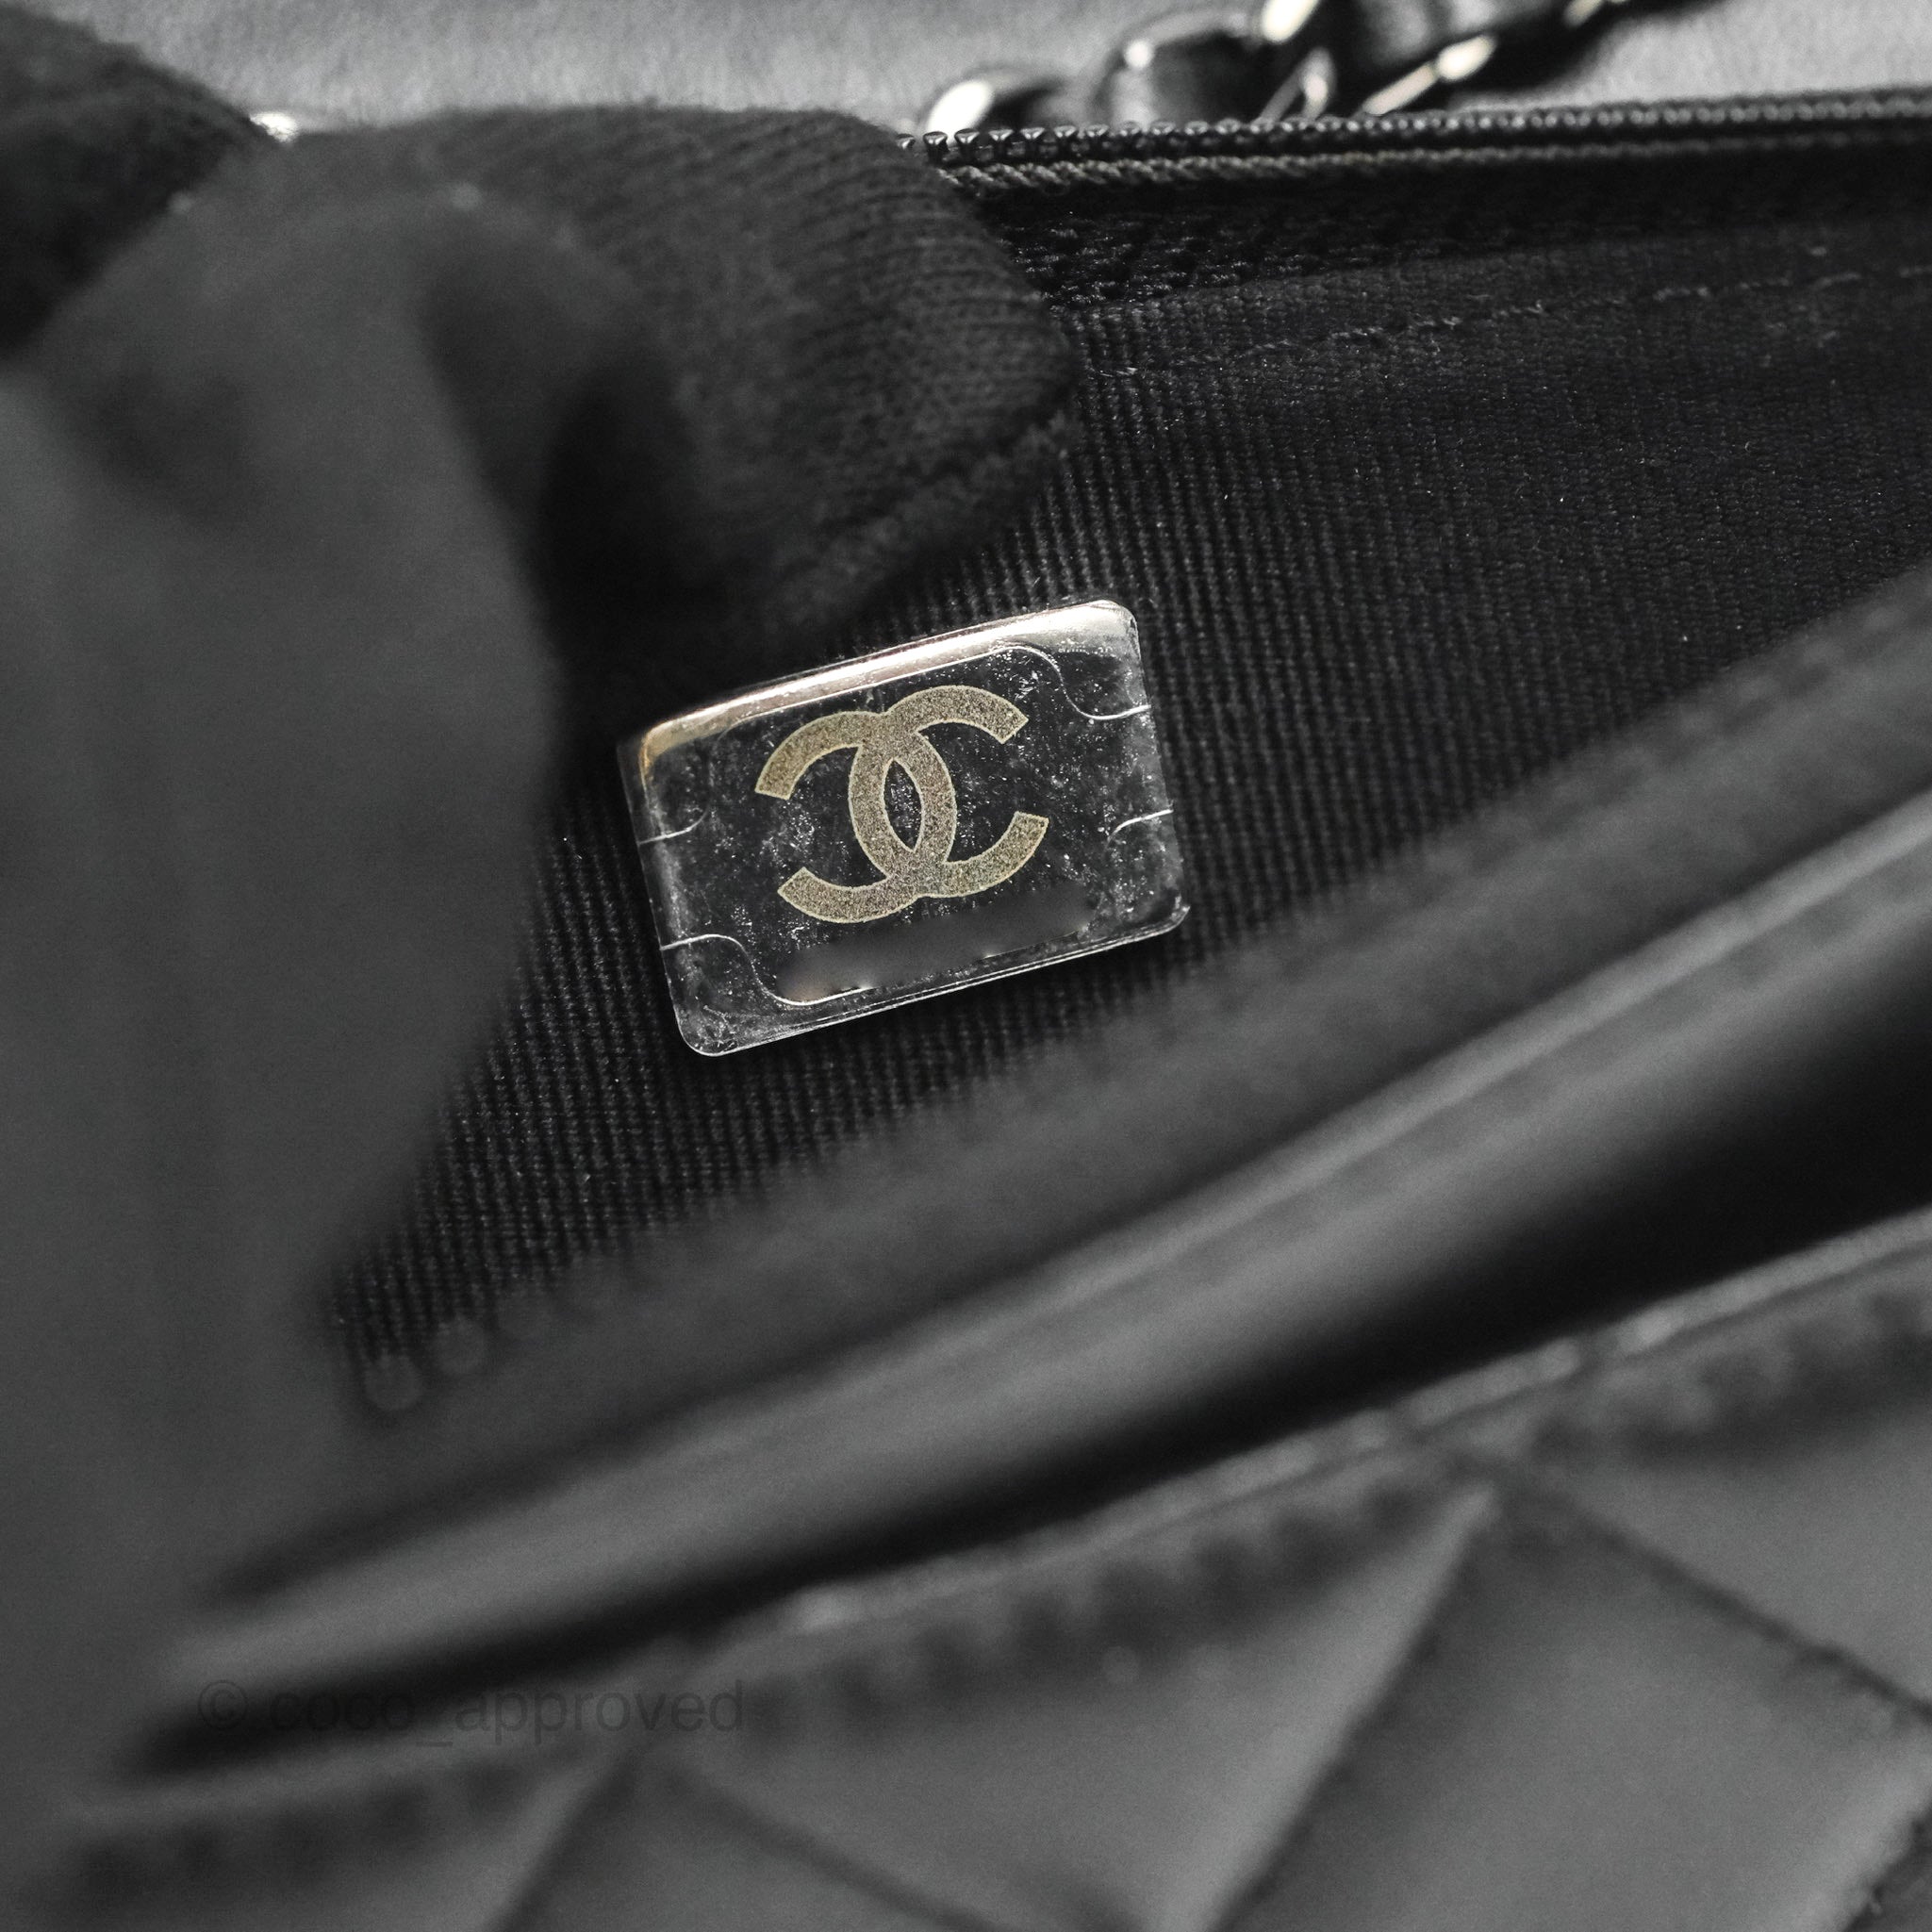 Chanel Trendy CC WOC Black Lambskin So Black Hardware – Coco